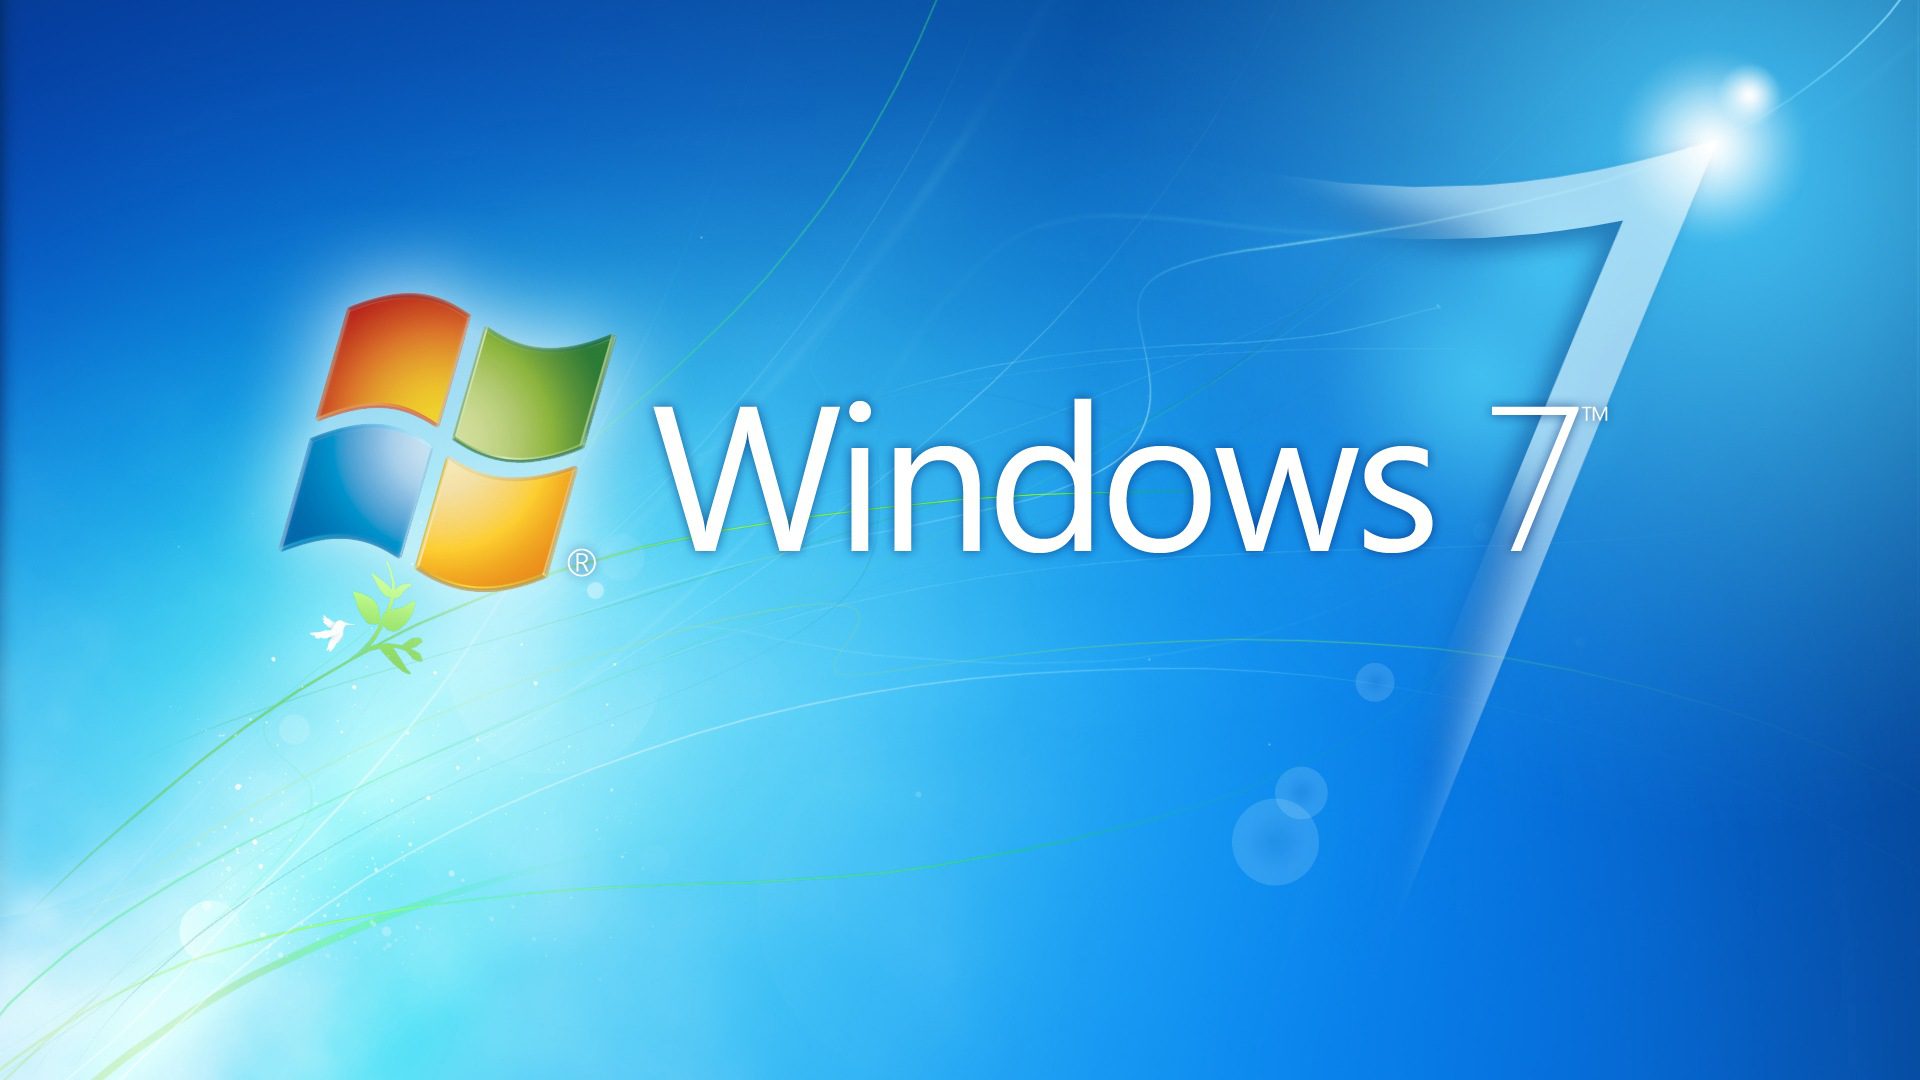 64 bit operating system free download windows 7 apa manual 7th edition free pdf download